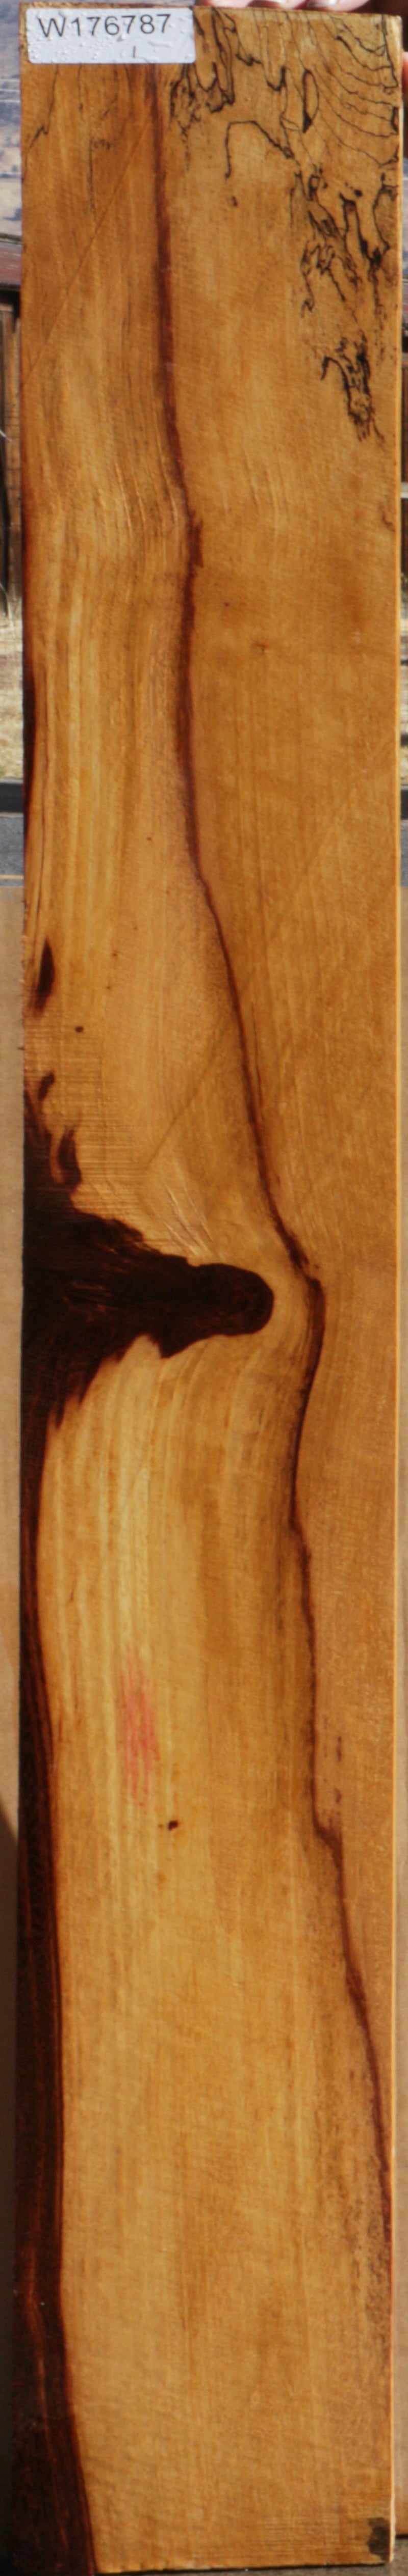 Spalted Tamarind Lumber